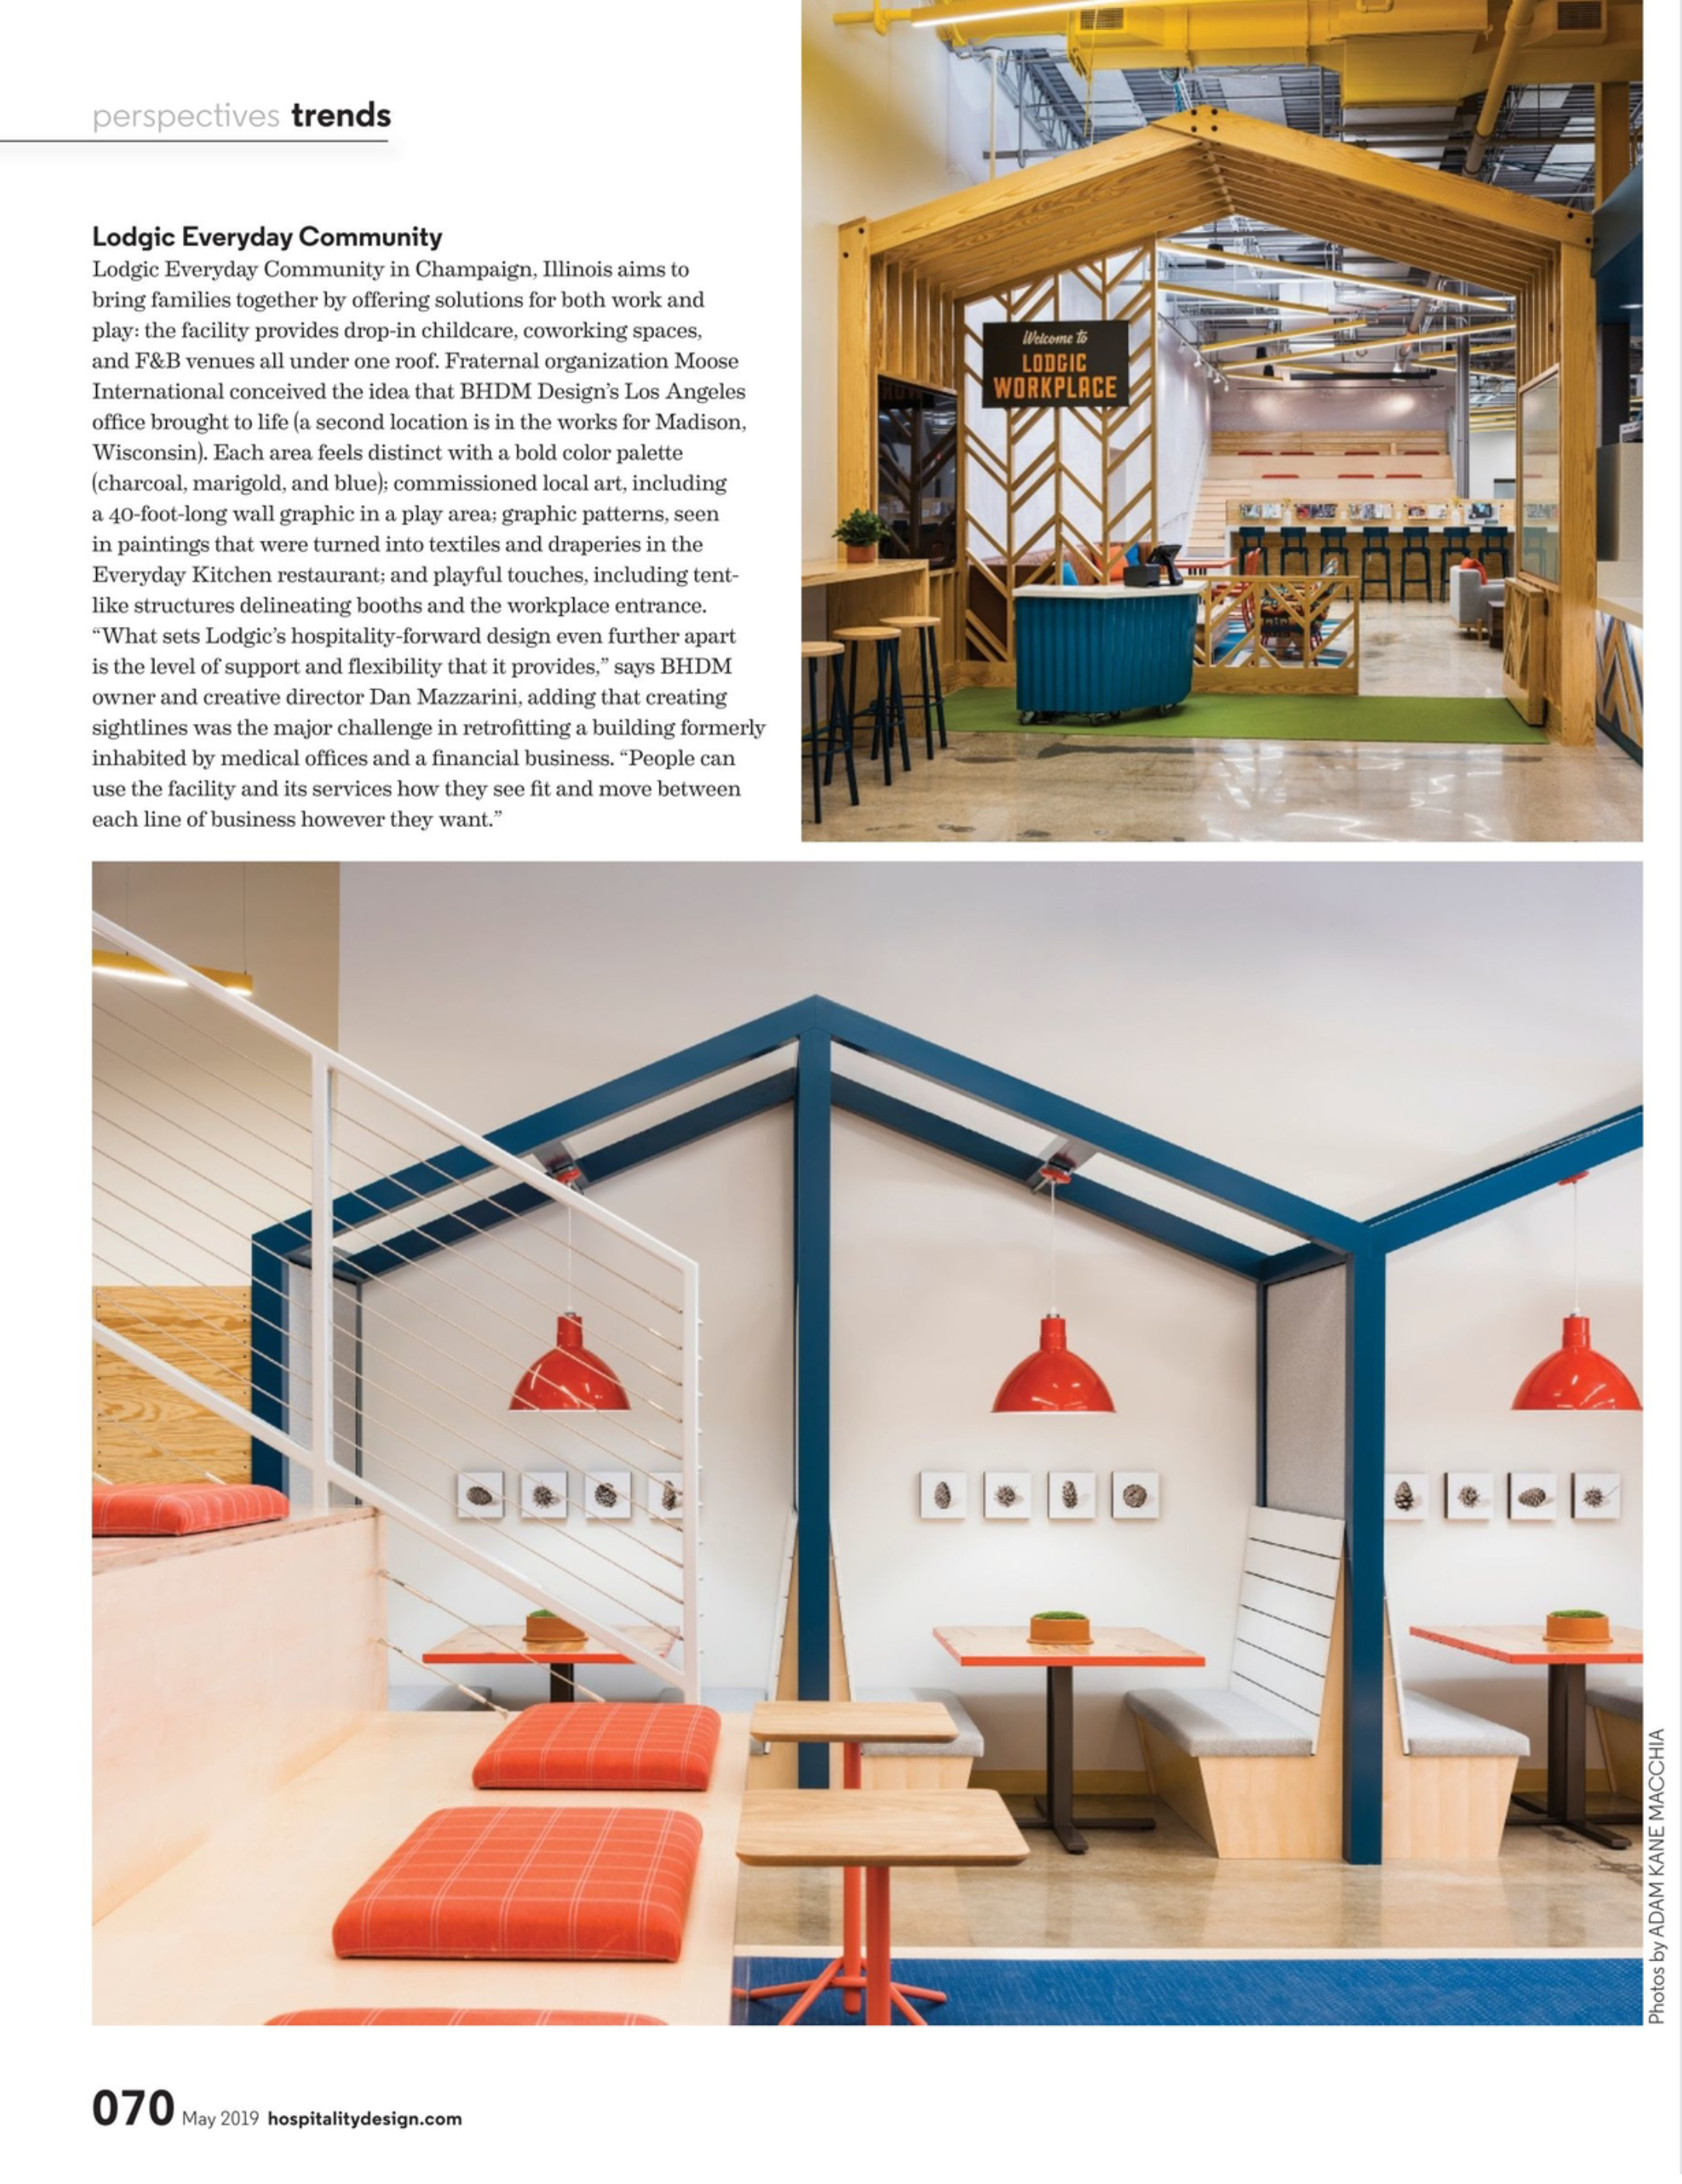 Hospitality Design - May 2019-LODGIC.jpg